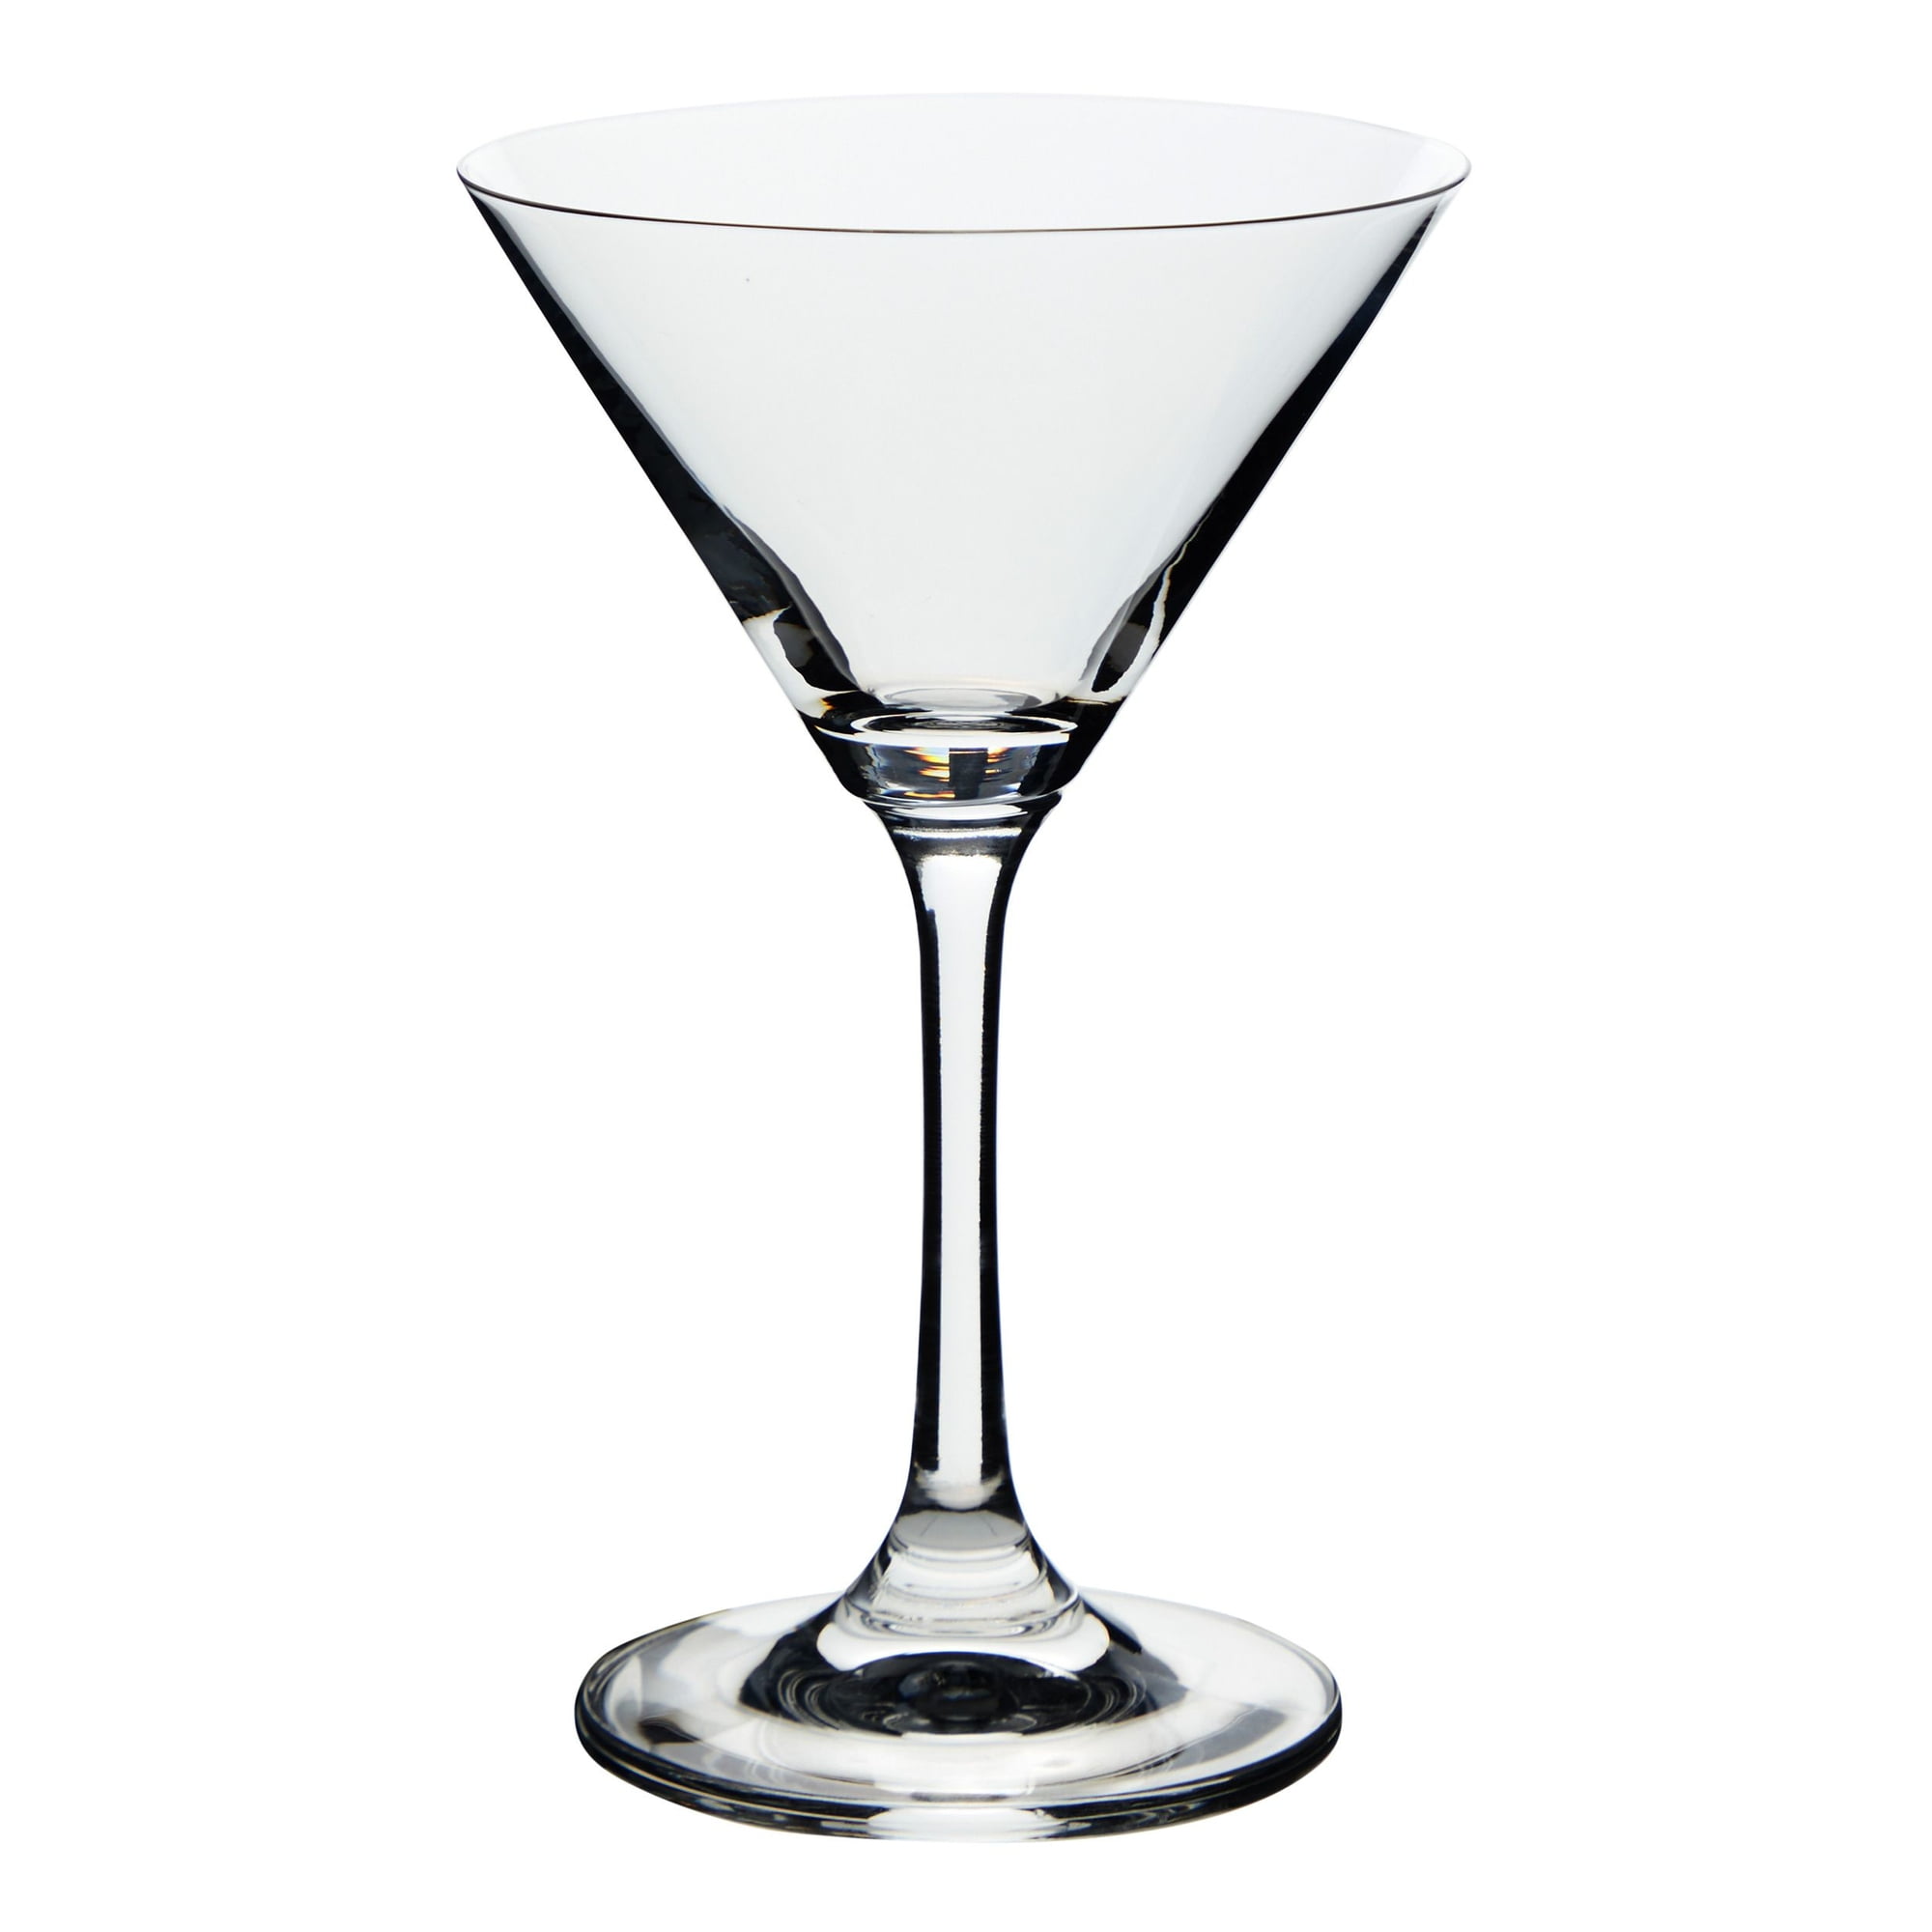 Miniature 3oz Martini Glasses - Pack of 6